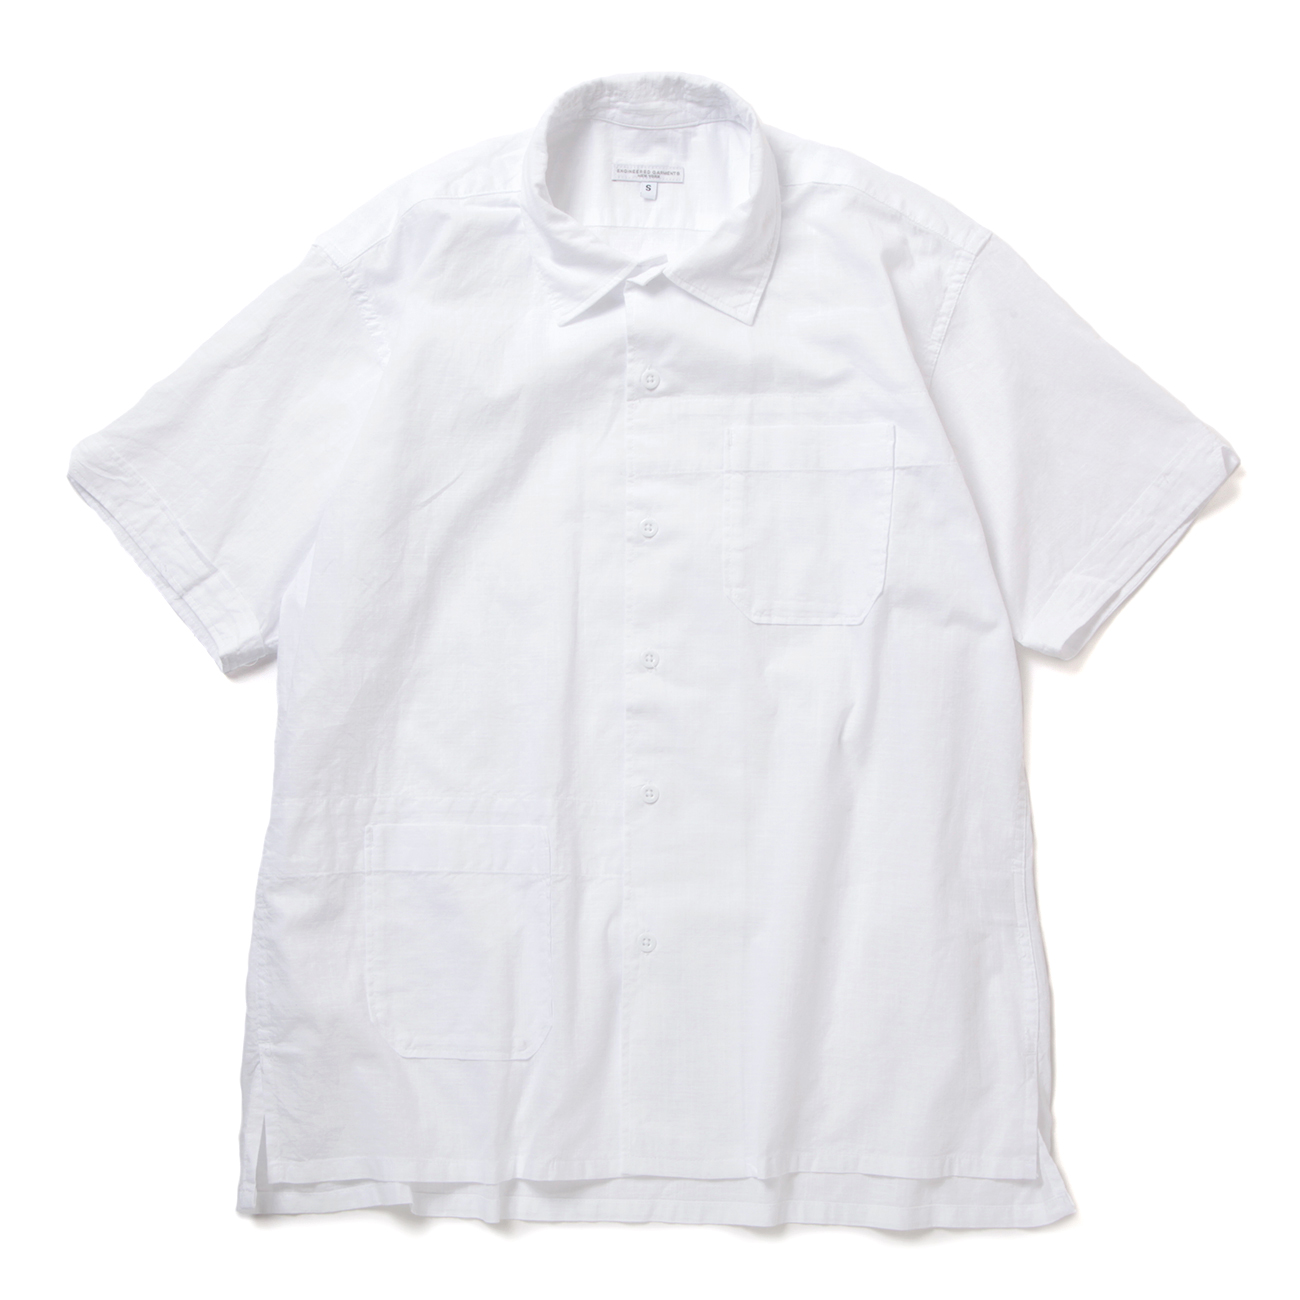 Camp Shirt - Cotton Handkerchief - White